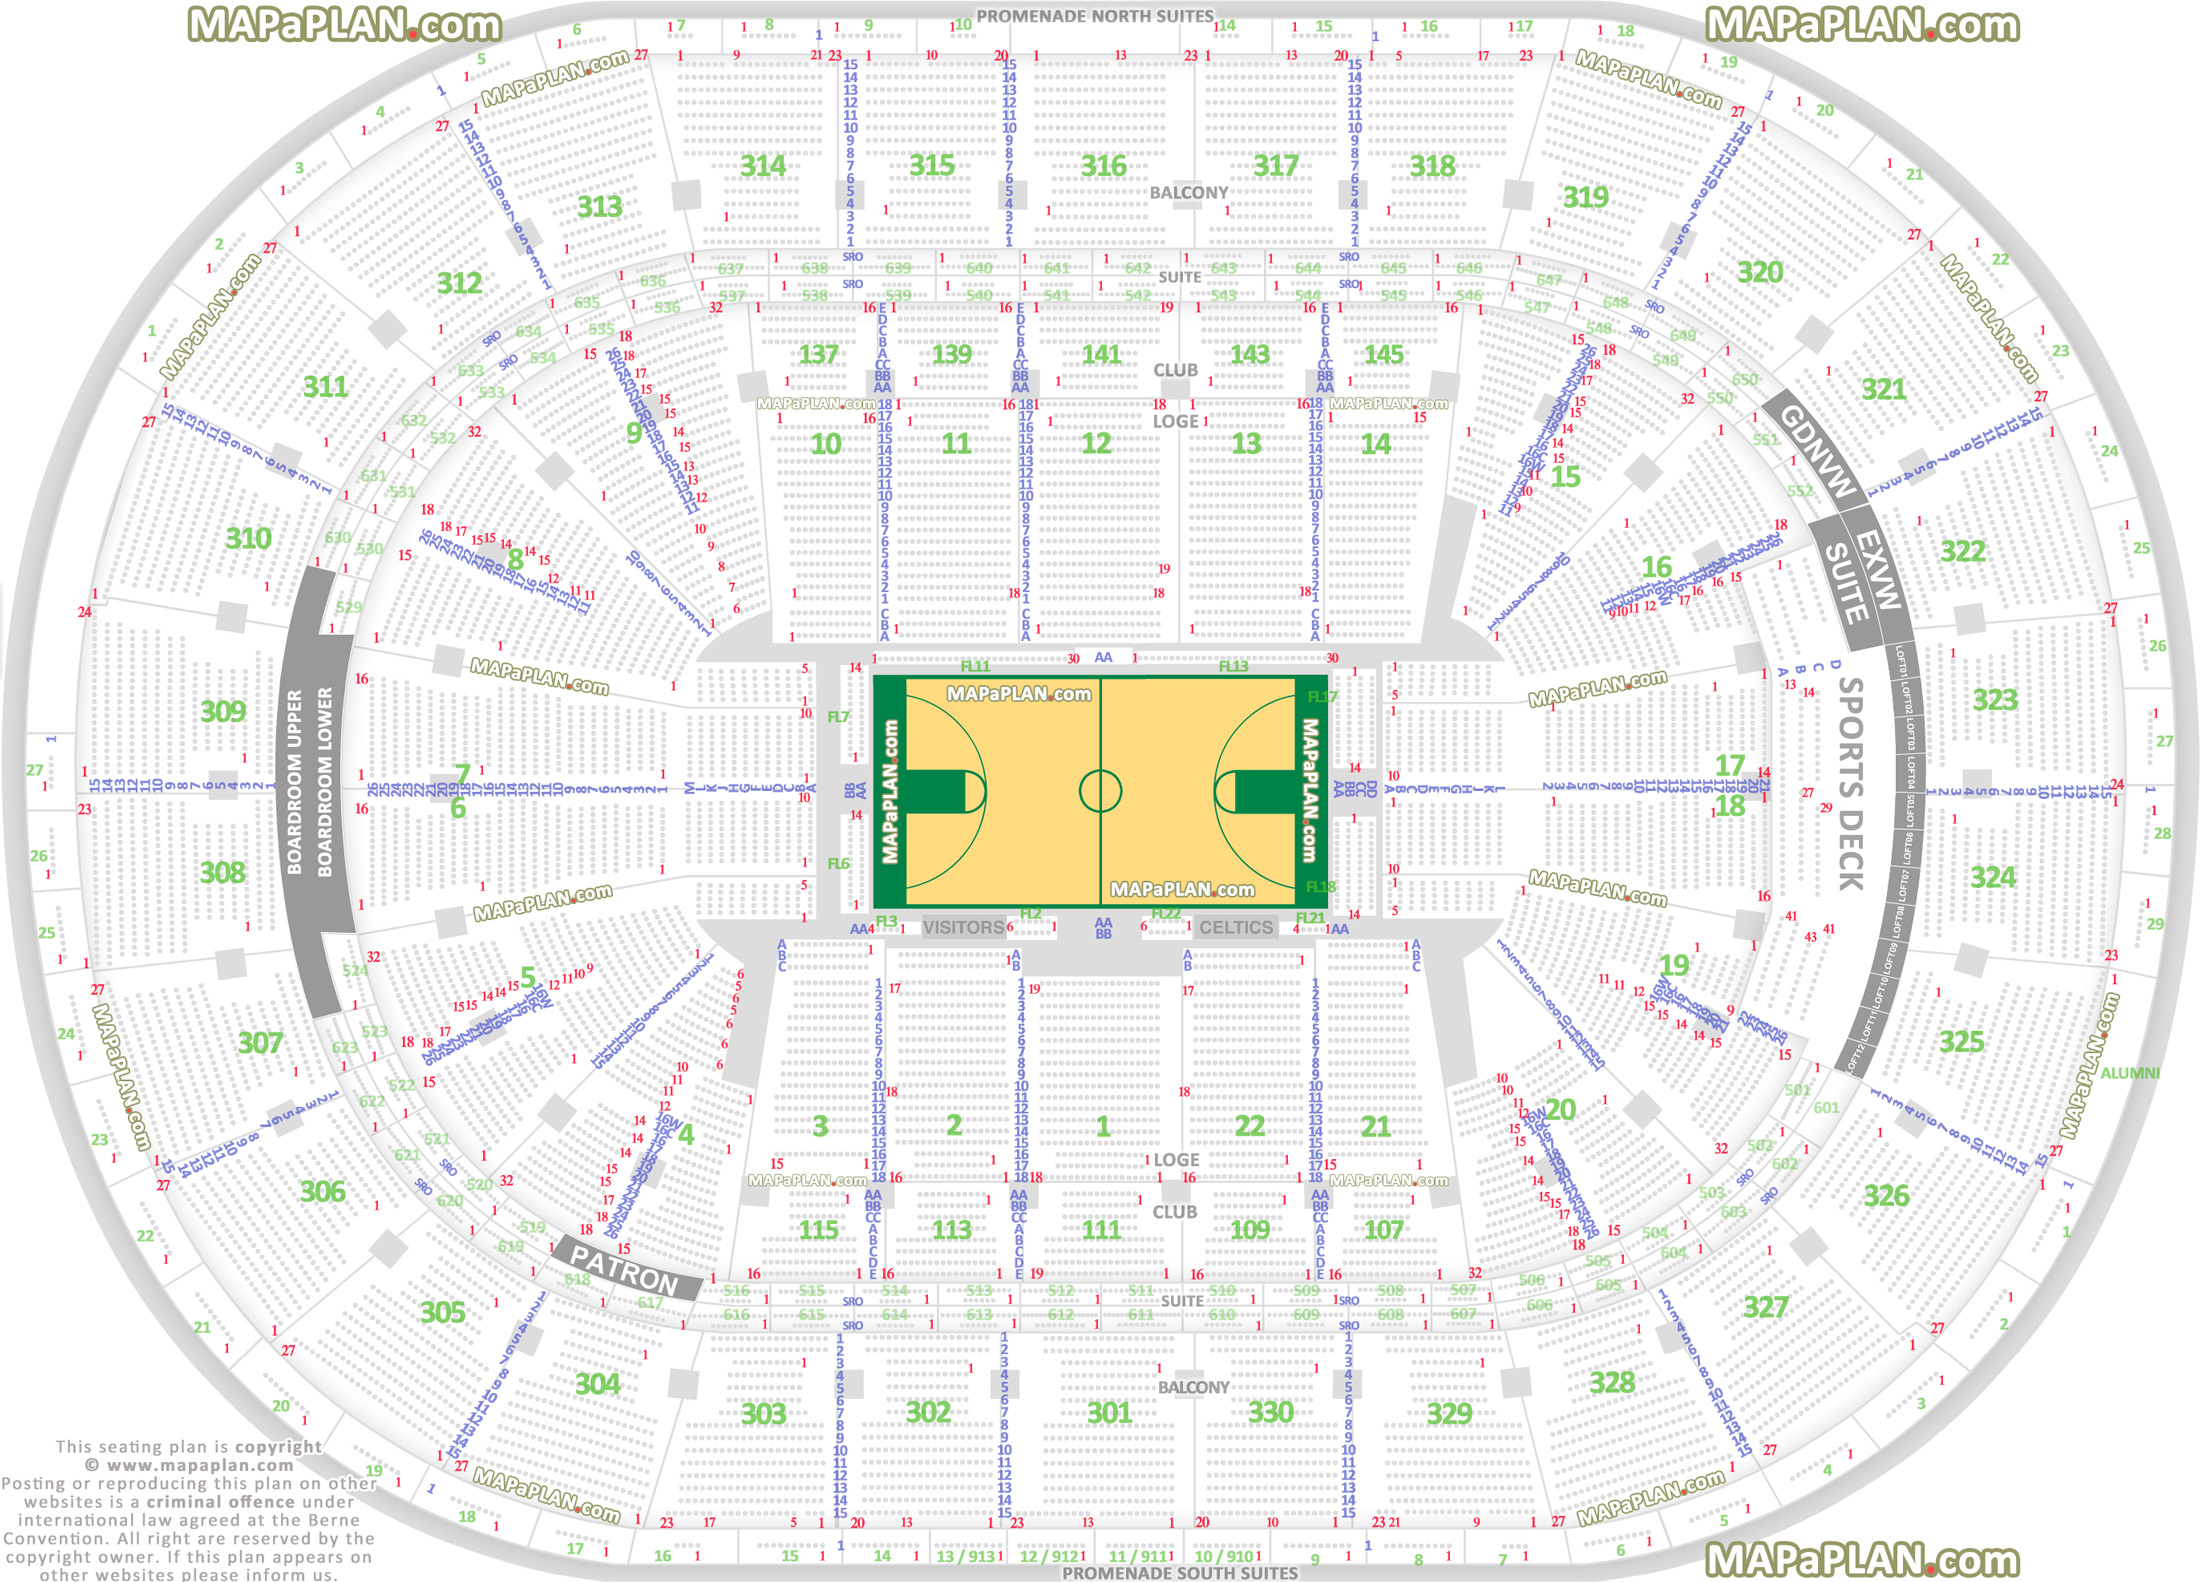 boston celtics nba basketball court best seat finder chart sports deck precise aisle seat numbering Boston TD Garden seating chart